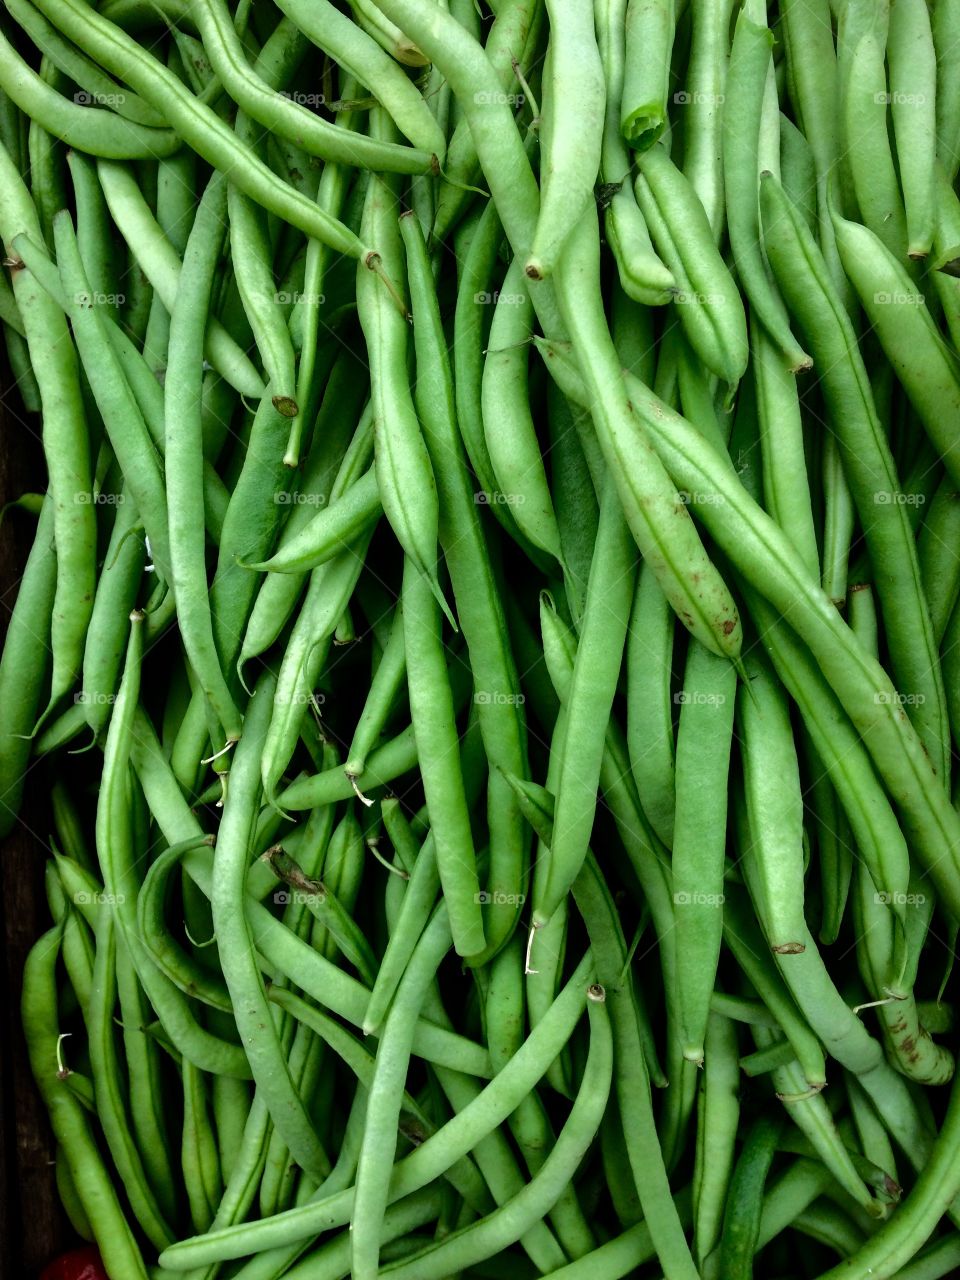 Market peas